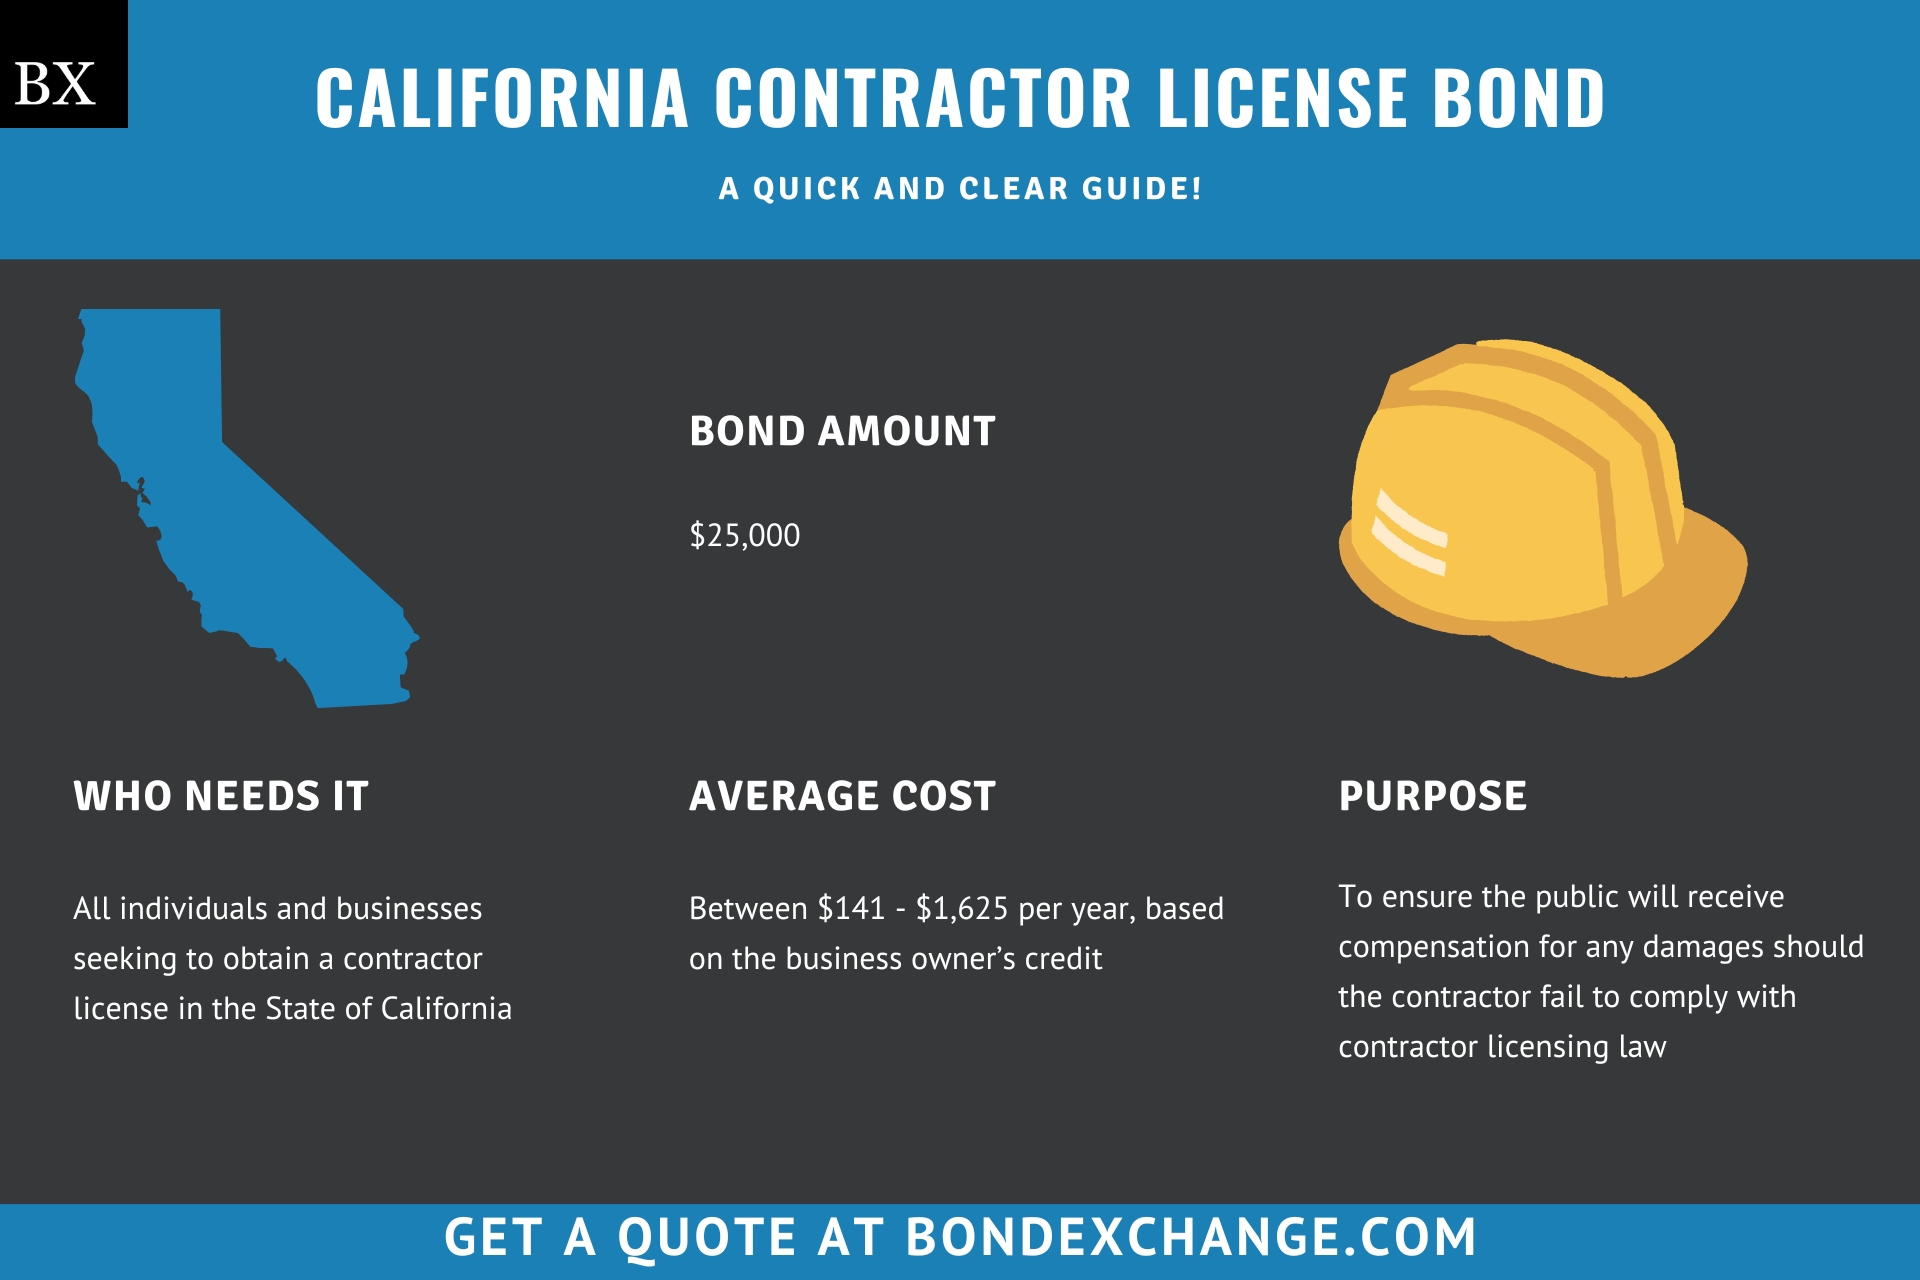 California Contractor License Bond